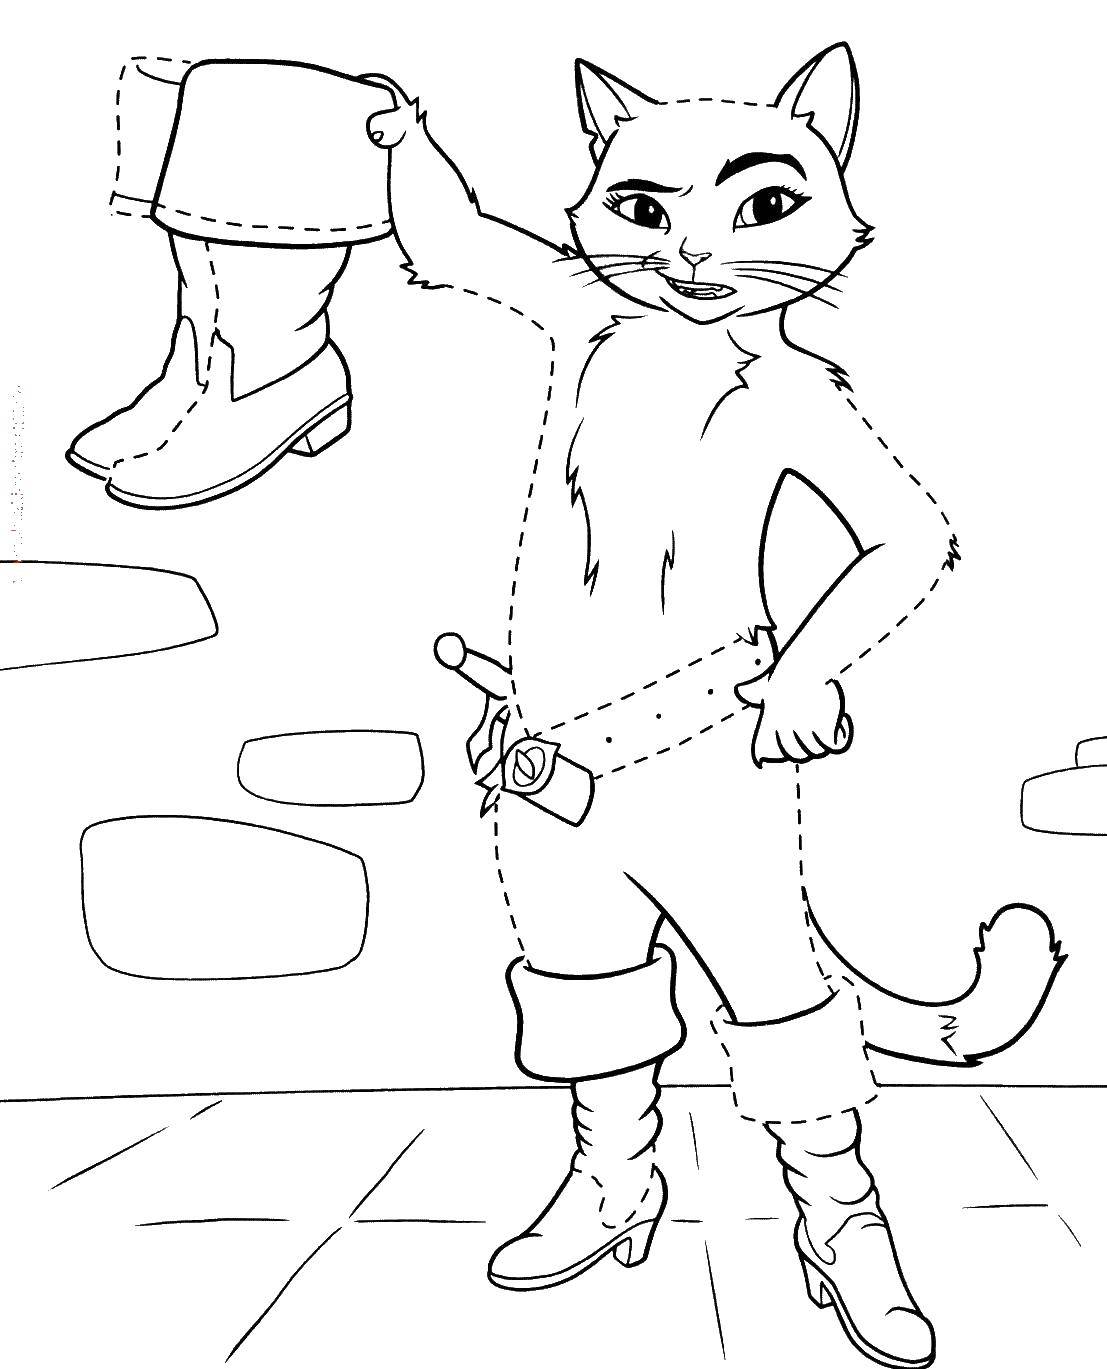 Название: Раскраска Кот в сапогах. Категория: персонаж из сказки. Теги: кот, сапоги.